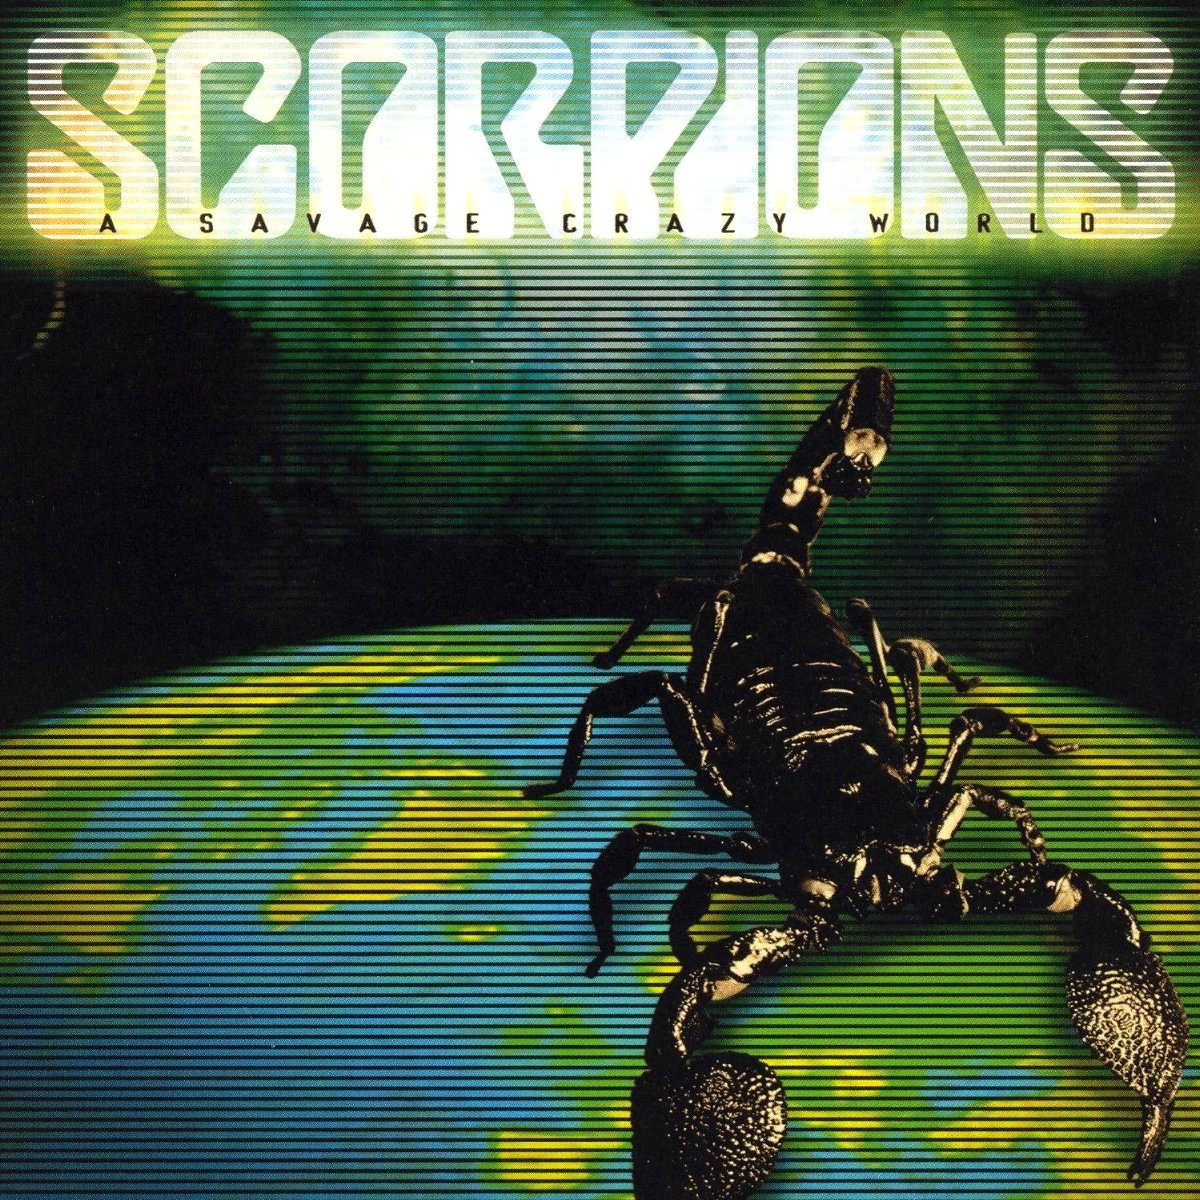 Scorpions world. Группа скорпионс 2002. Scorpions - Savage Amusement. Scorpions Crazy World 1990. Scorpions 1972.